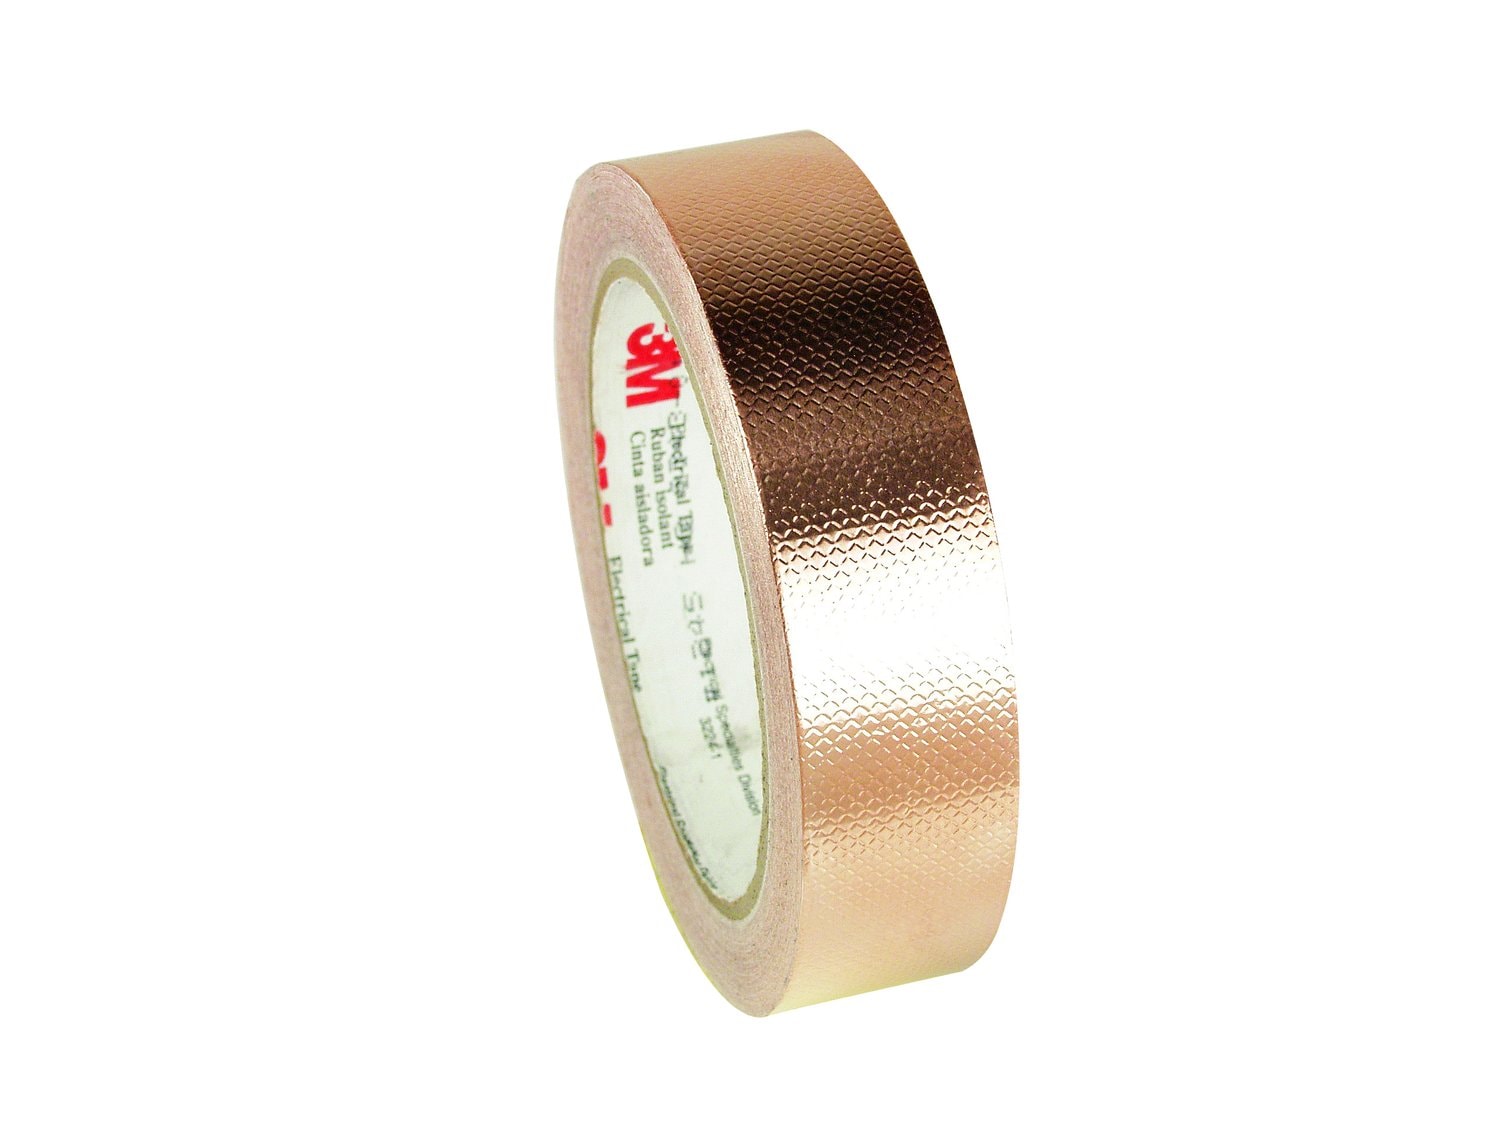 7100058012 - 3M Embossed Copper Foil EMI Shielding Tape 1245, 7.7 in x 10 in, Sheet,
10 Sheets/Bag